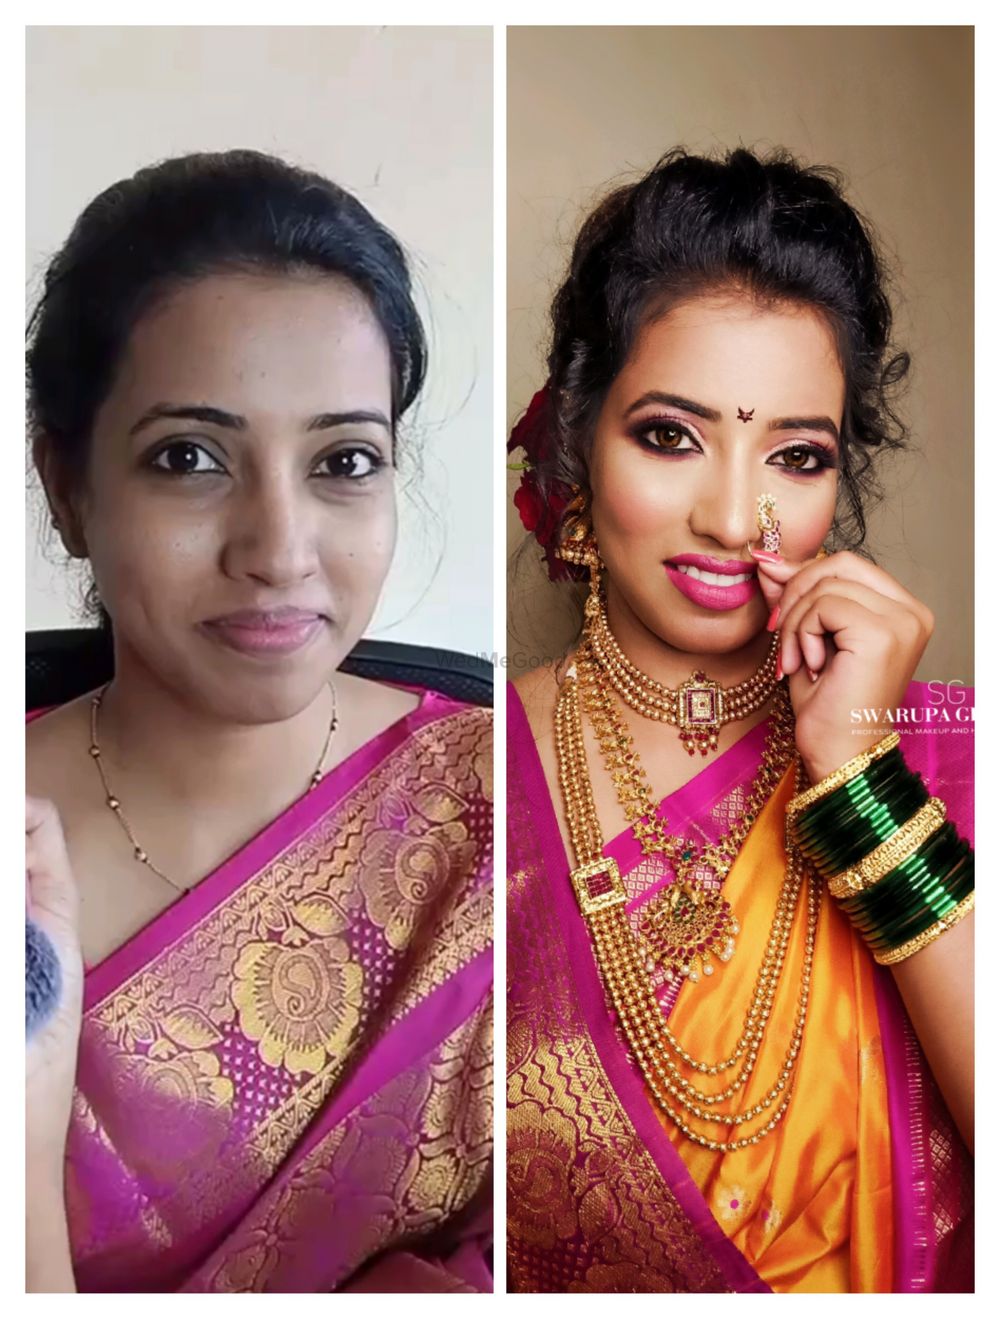 Photo From Maharashtrian brides by Makeup artist Swarupa Ghodke. - By Swarupa Ghodke Makeup Artistry